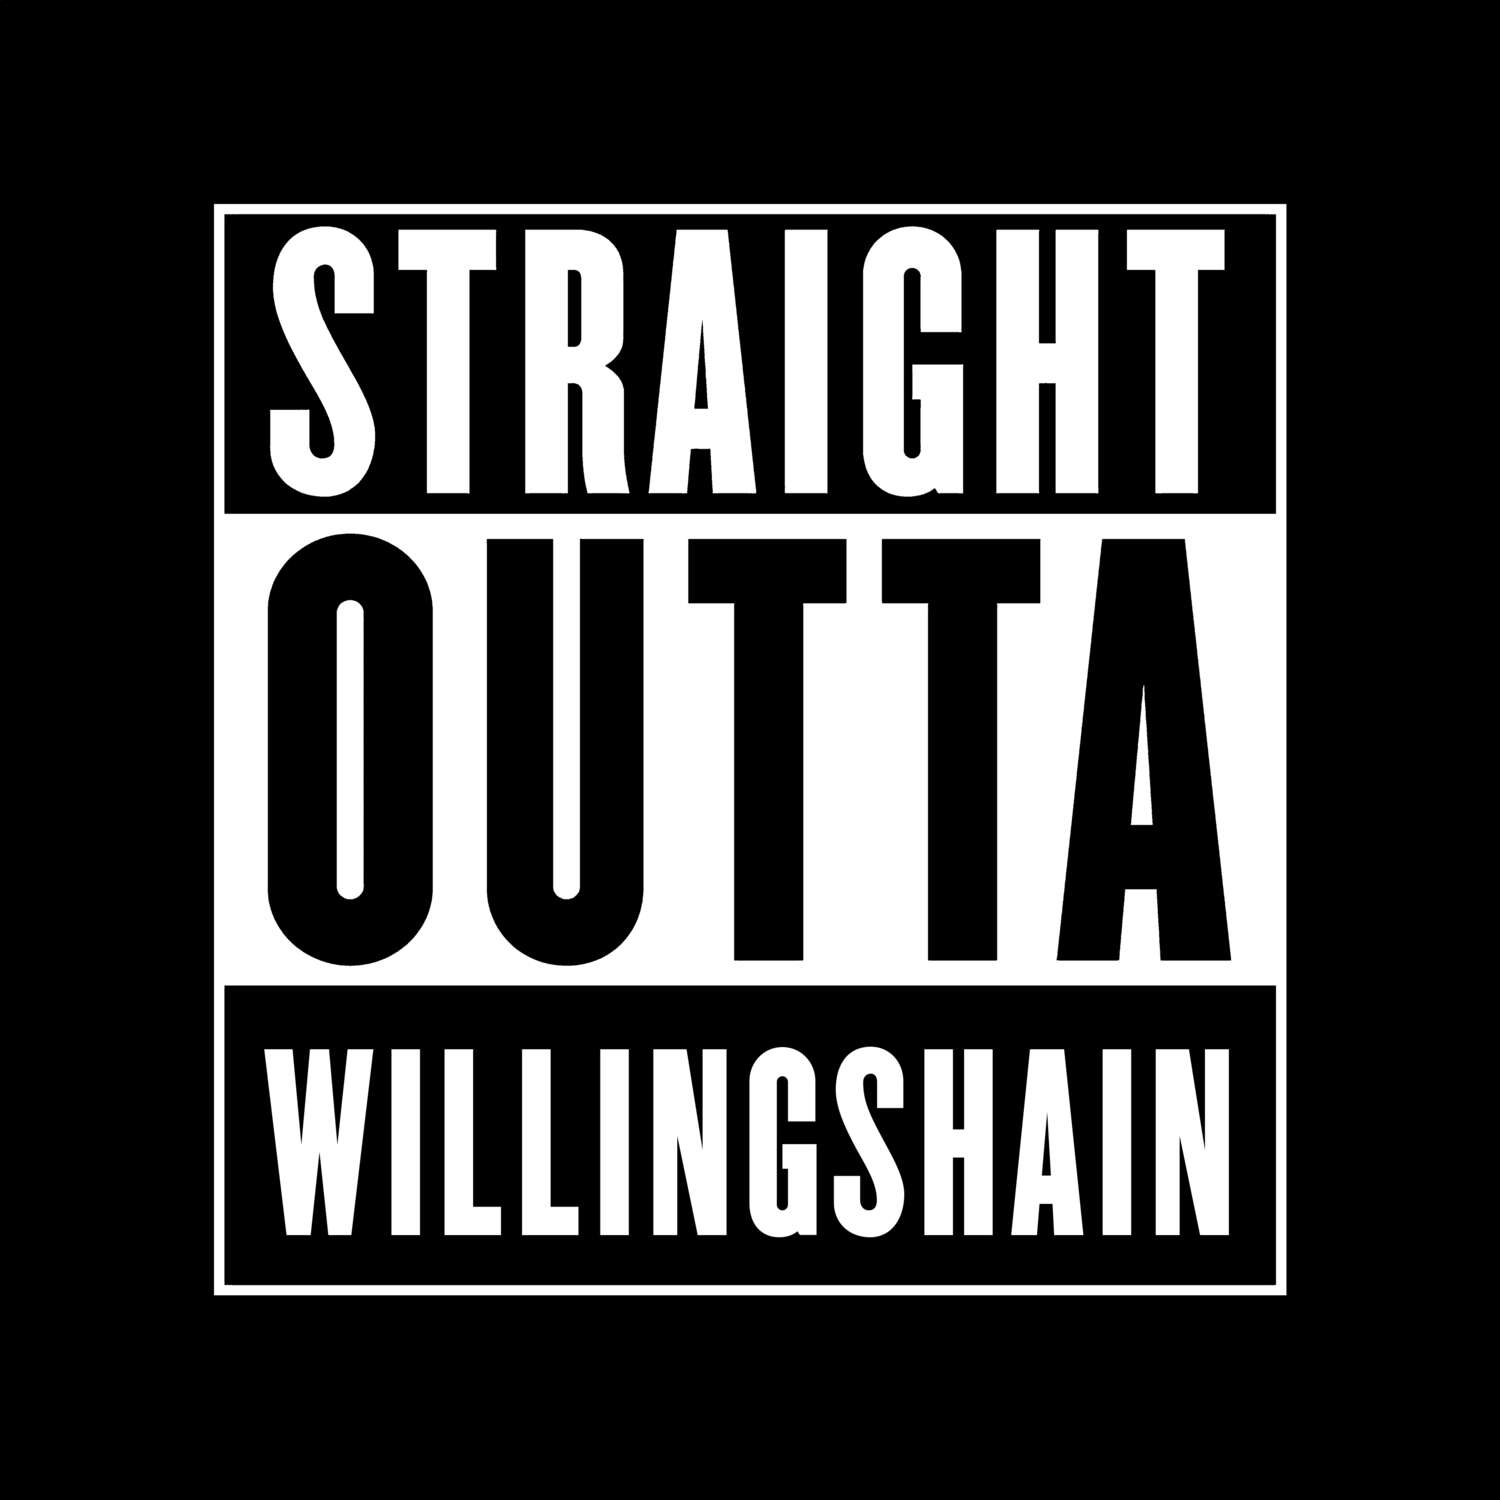 Willingshain T-Shirt »Straight Outta«